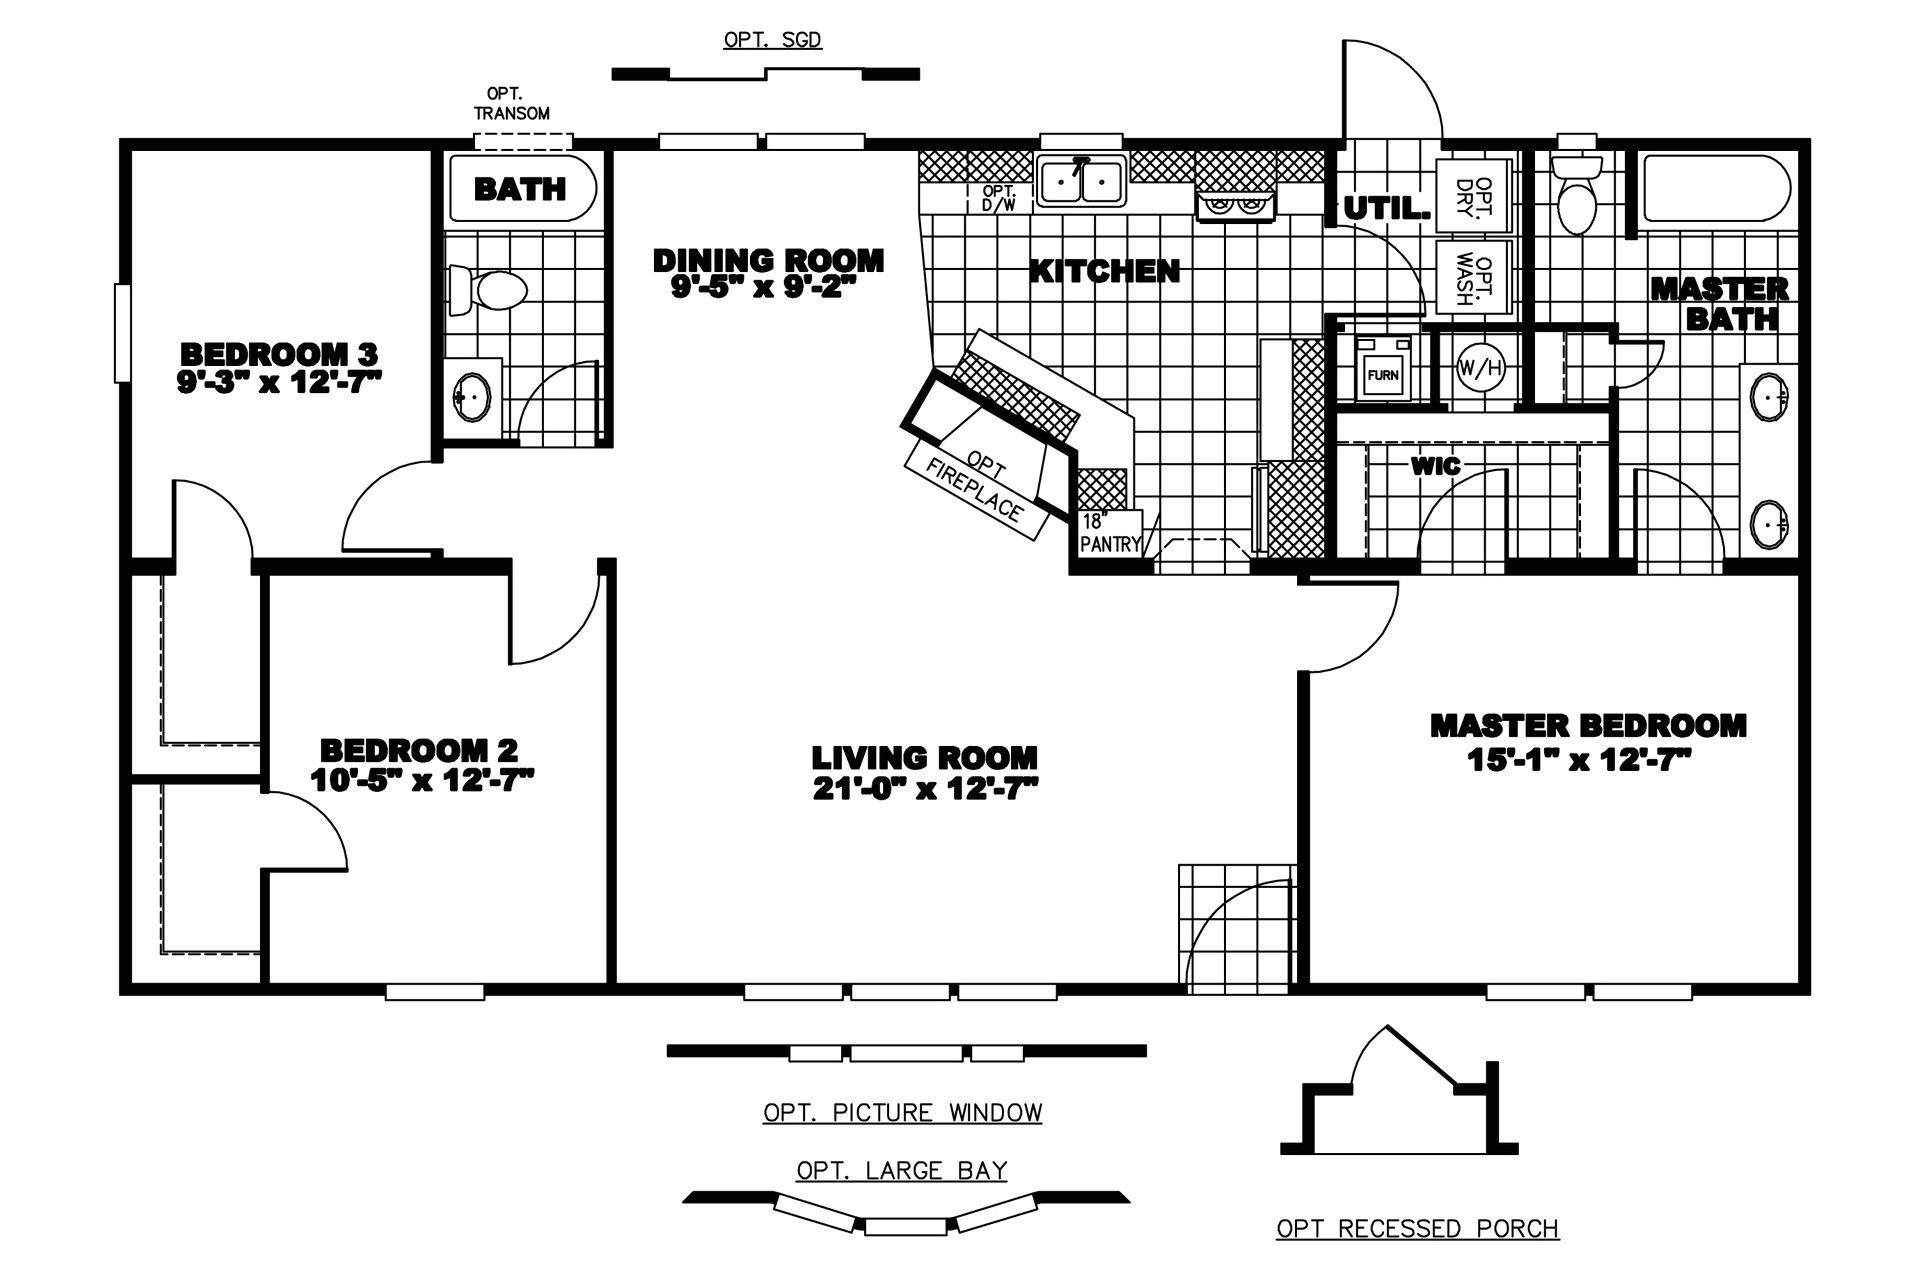 2005 clayton mobile home floor plans